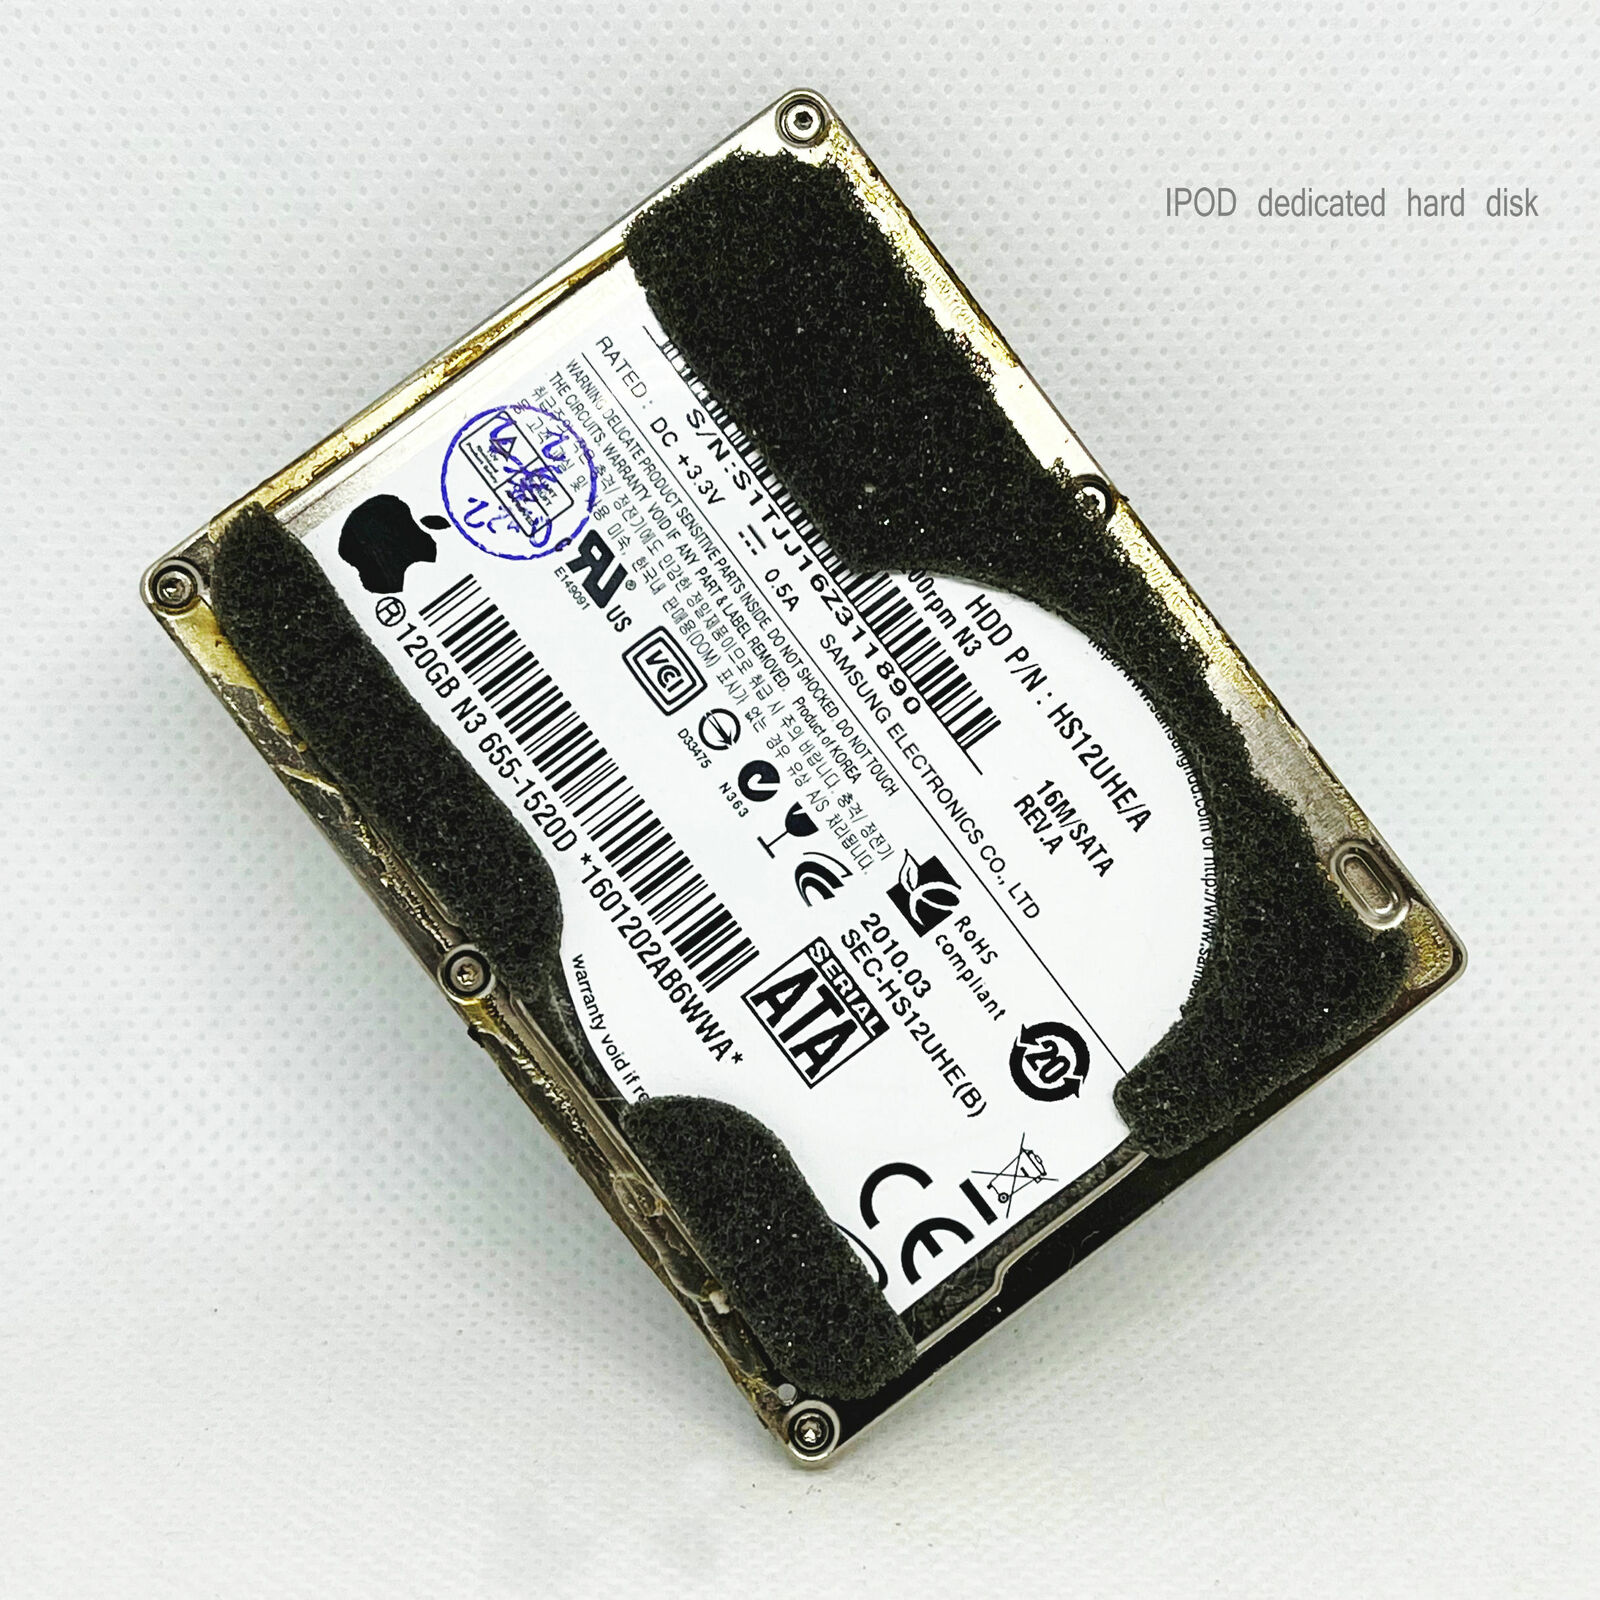 Samsung 120GB 4200RPM HS12UHE/A 16M SATA LIF interface 1.8-inch hard drive